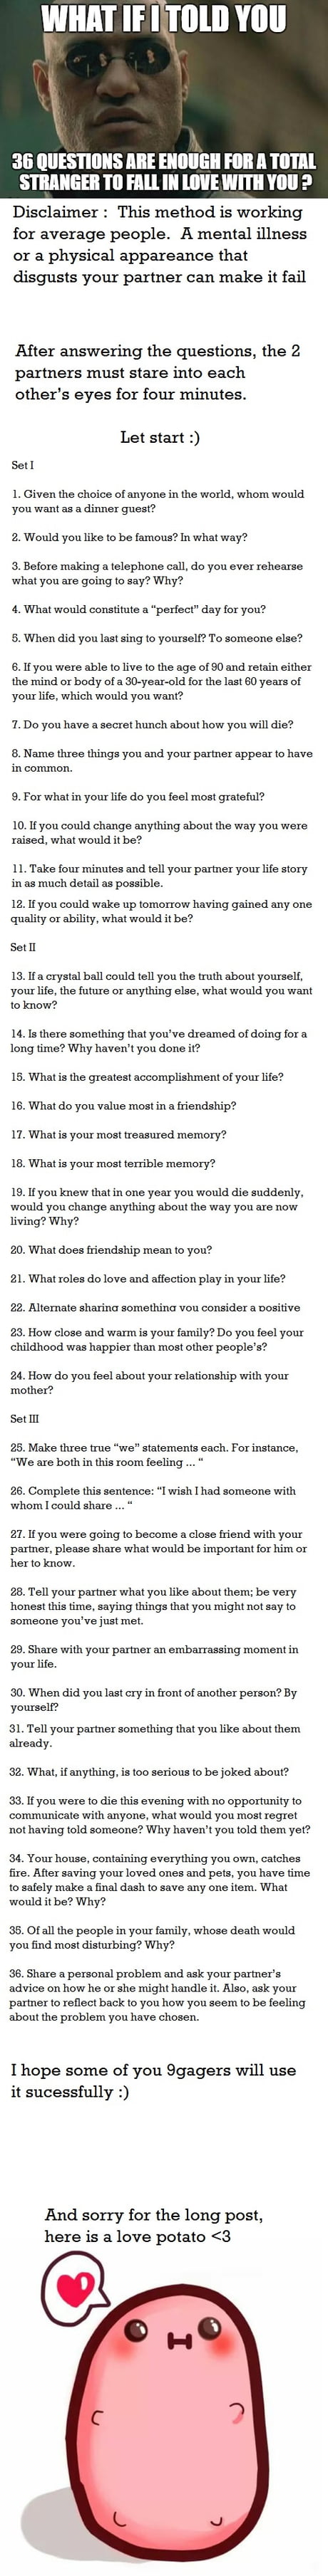 Relationships partner questions 101 Fun